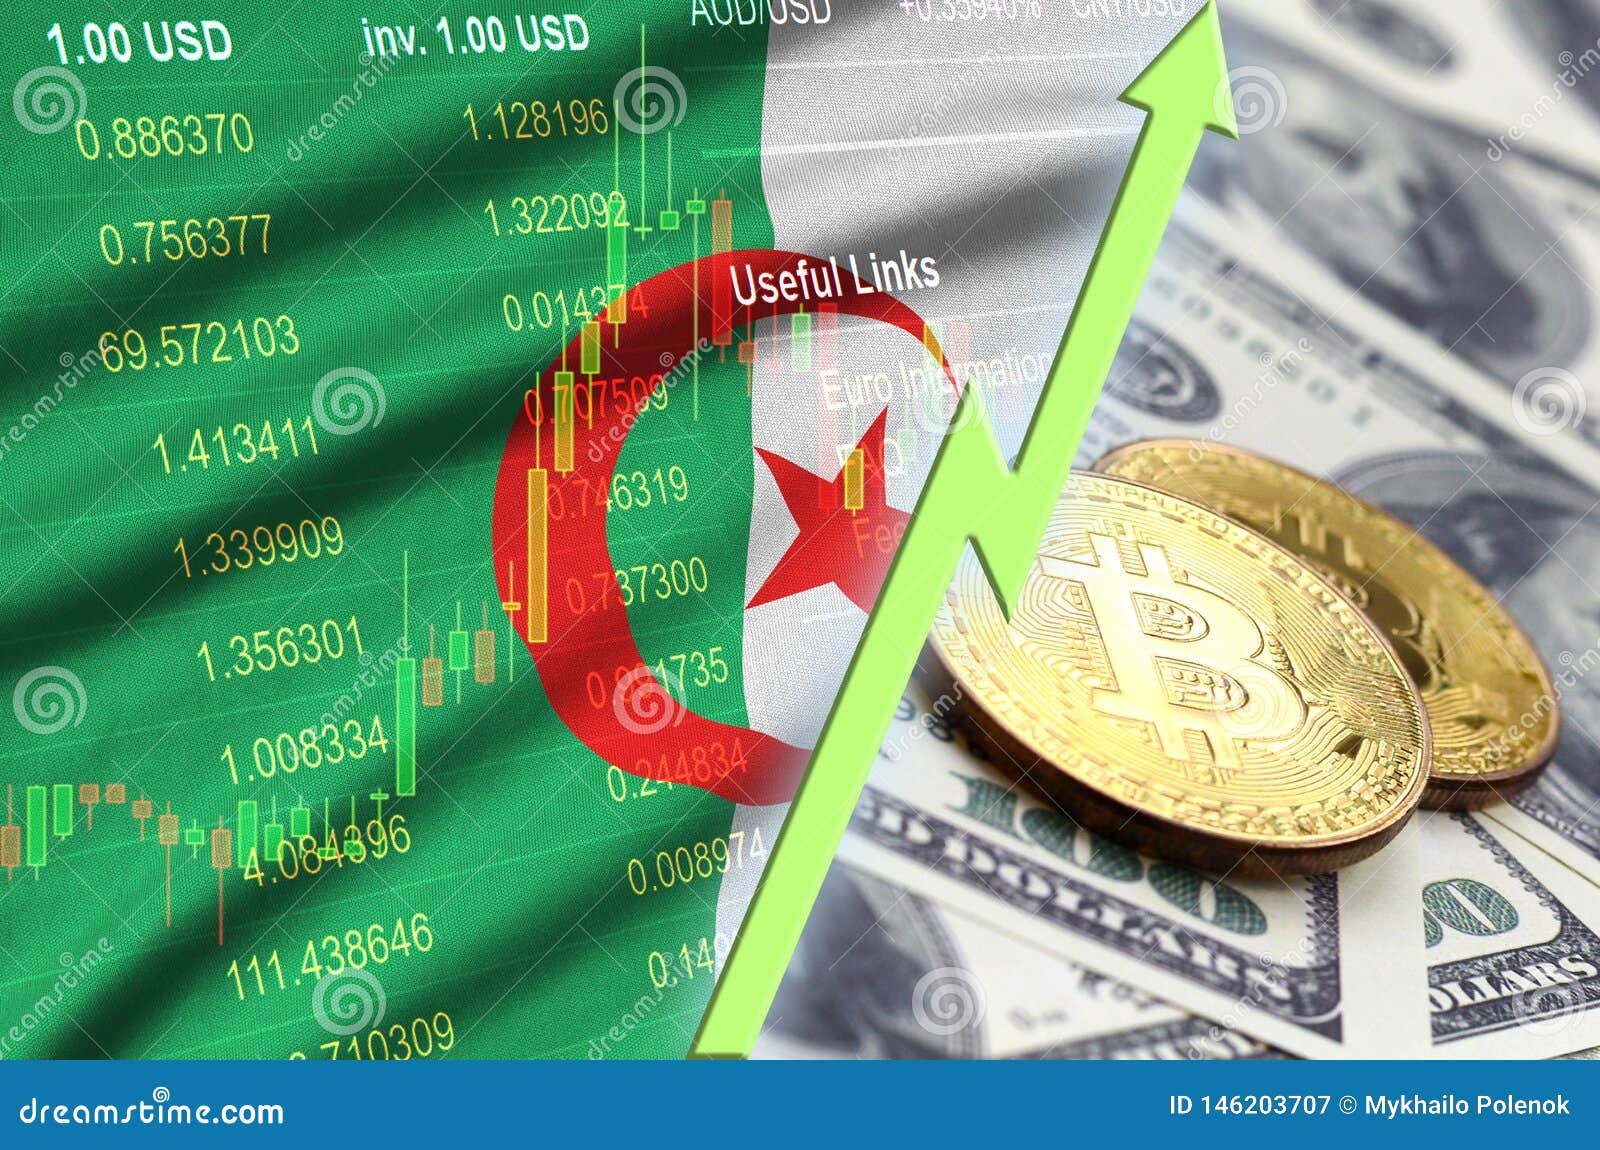 buy bitcoin in algeria with cash